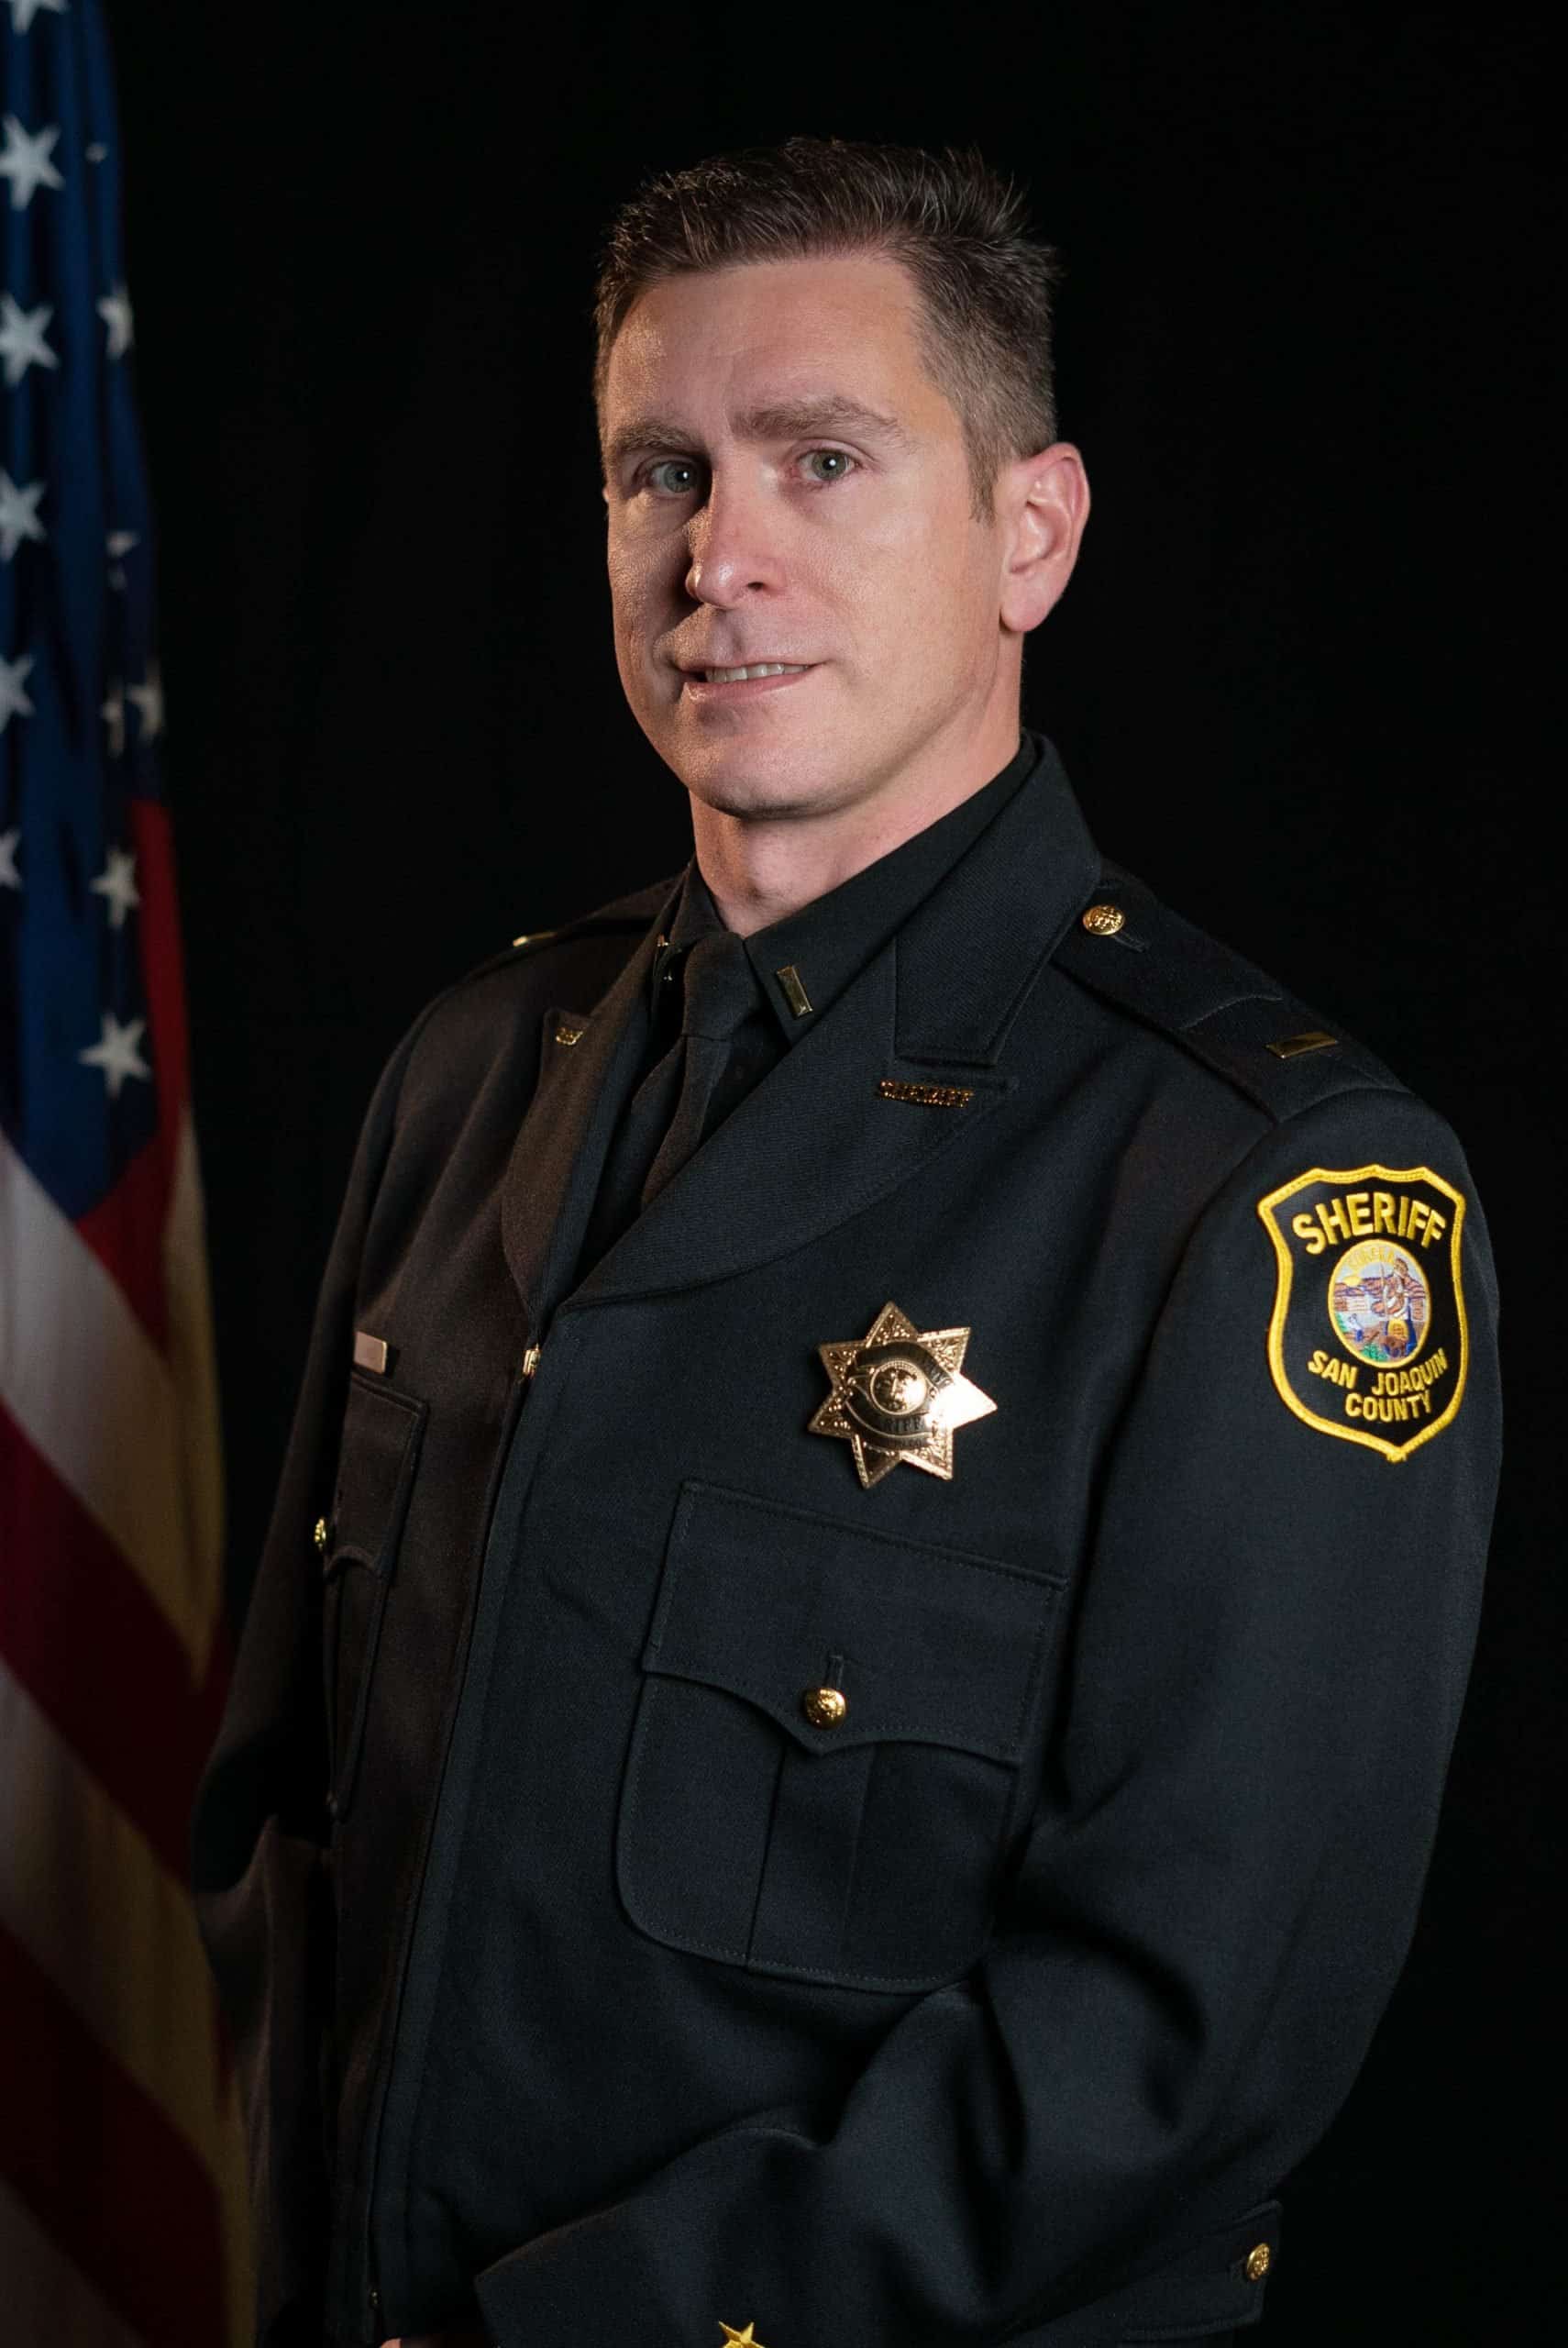 San Joaquin County Sheriff Lieutenant/District Commander James Boles